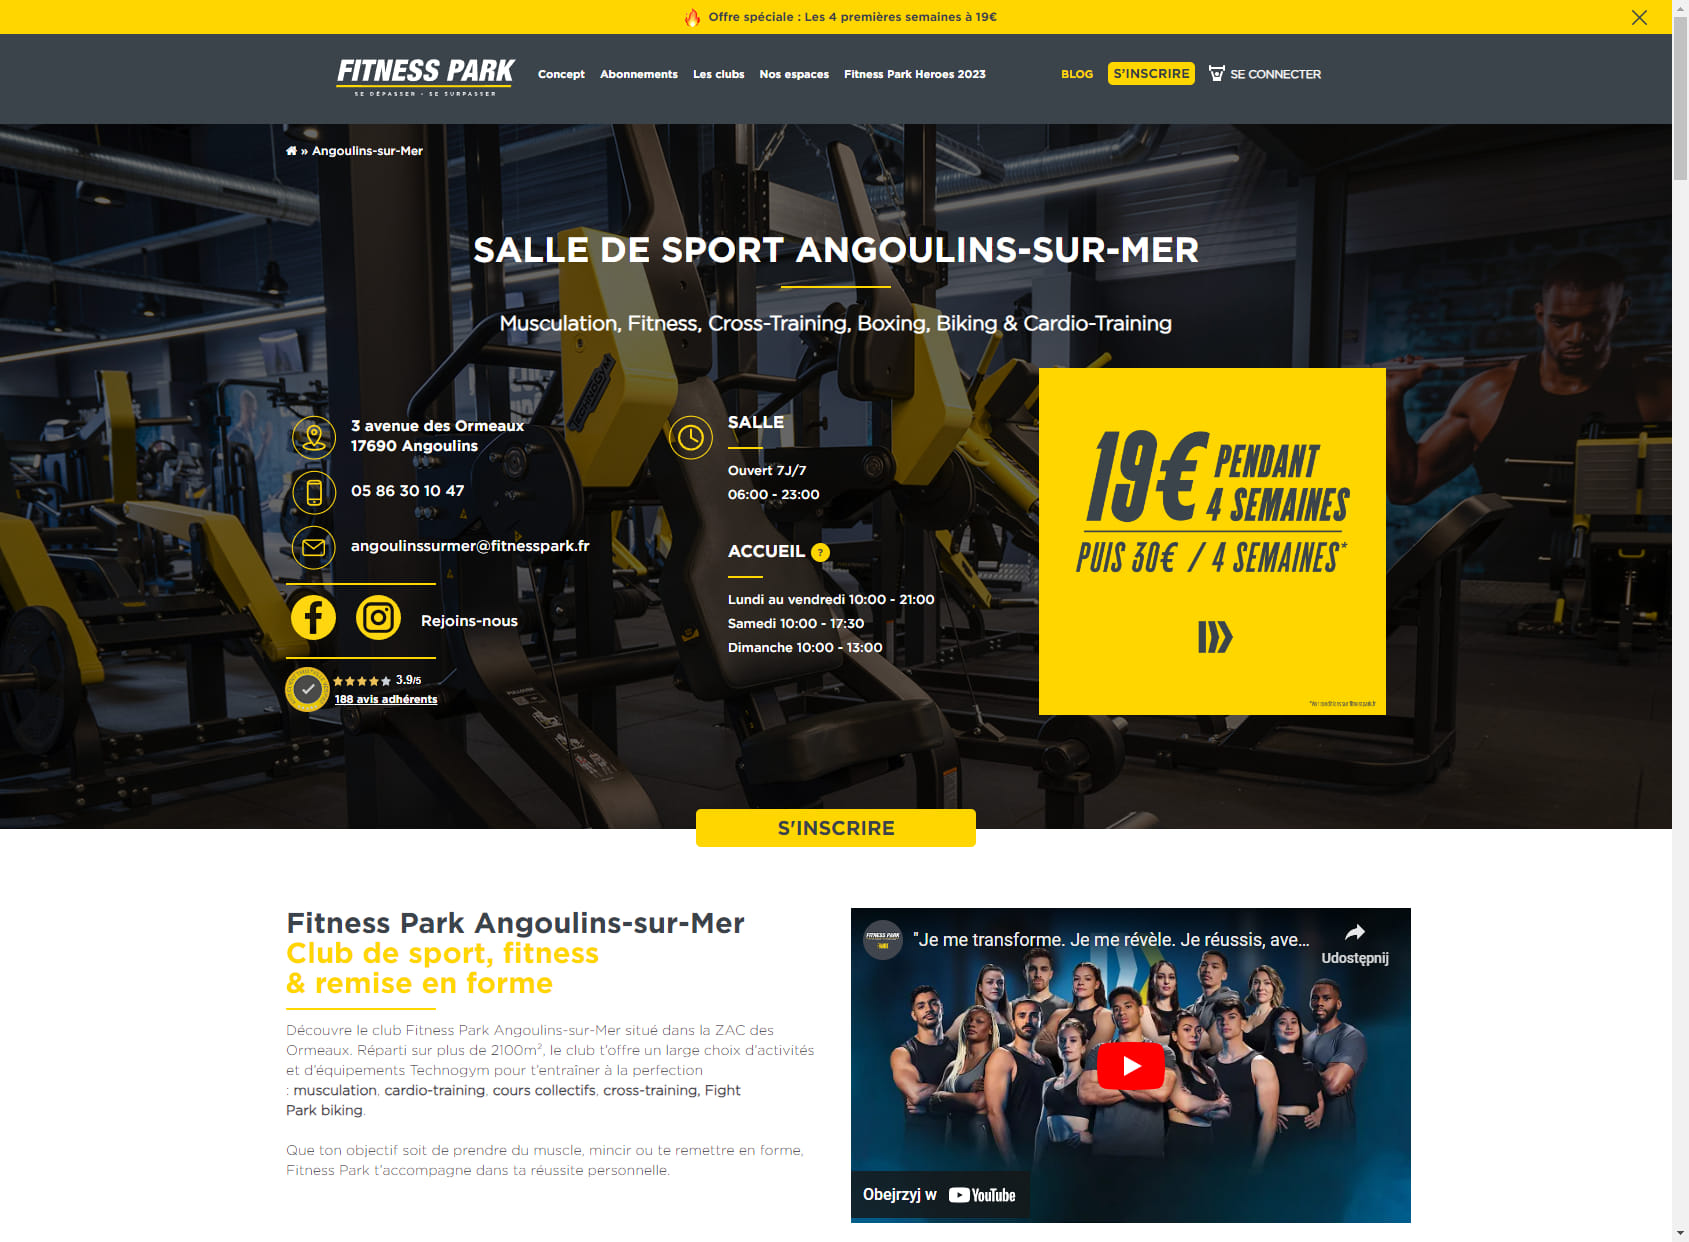 Salle de sport Angoulins-sur-Mer - Fitness Park